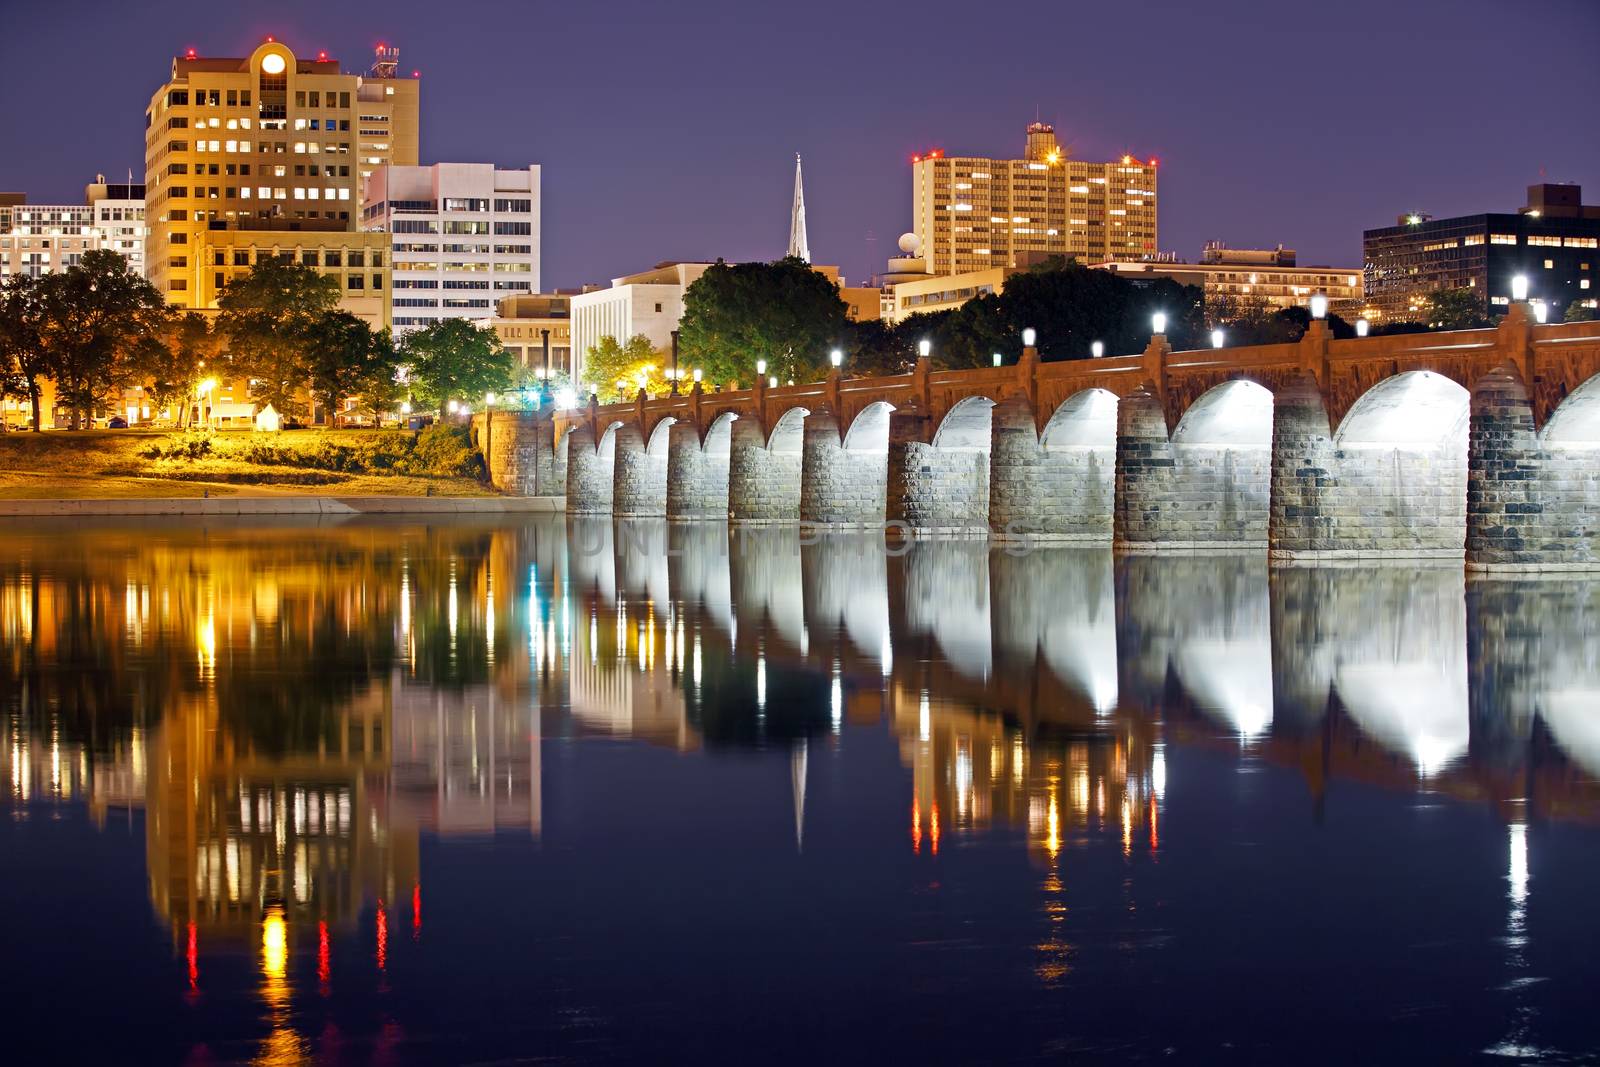 Harrisburg, Pennsylvania with the historic Market Street Bridge reflected on the Susquehanna River at night.